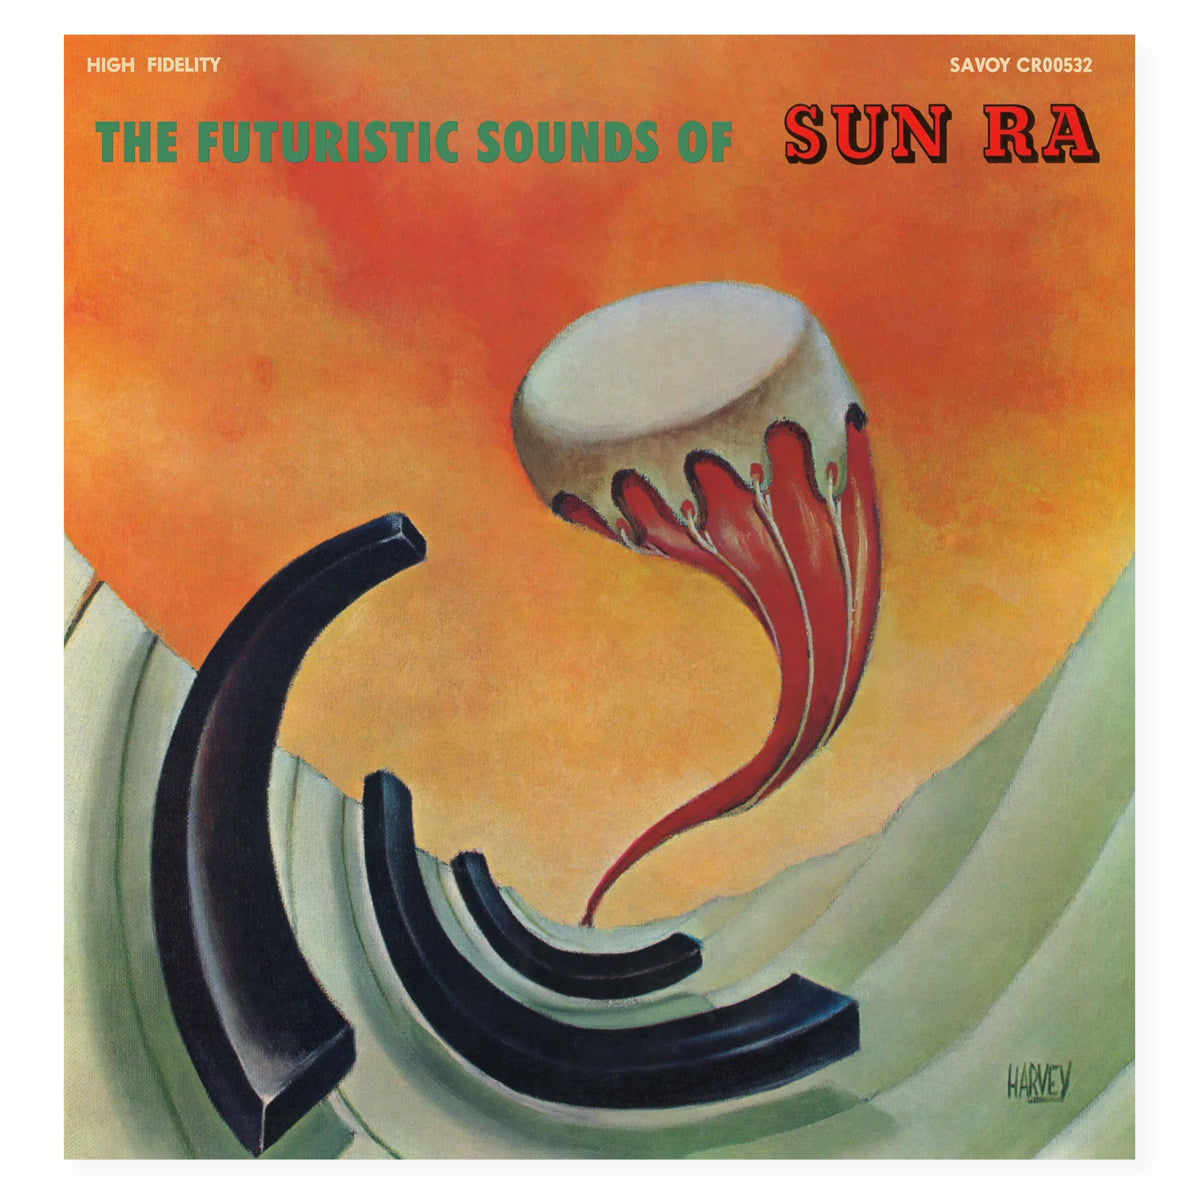 Sun Ra - The Futuristic Sounds